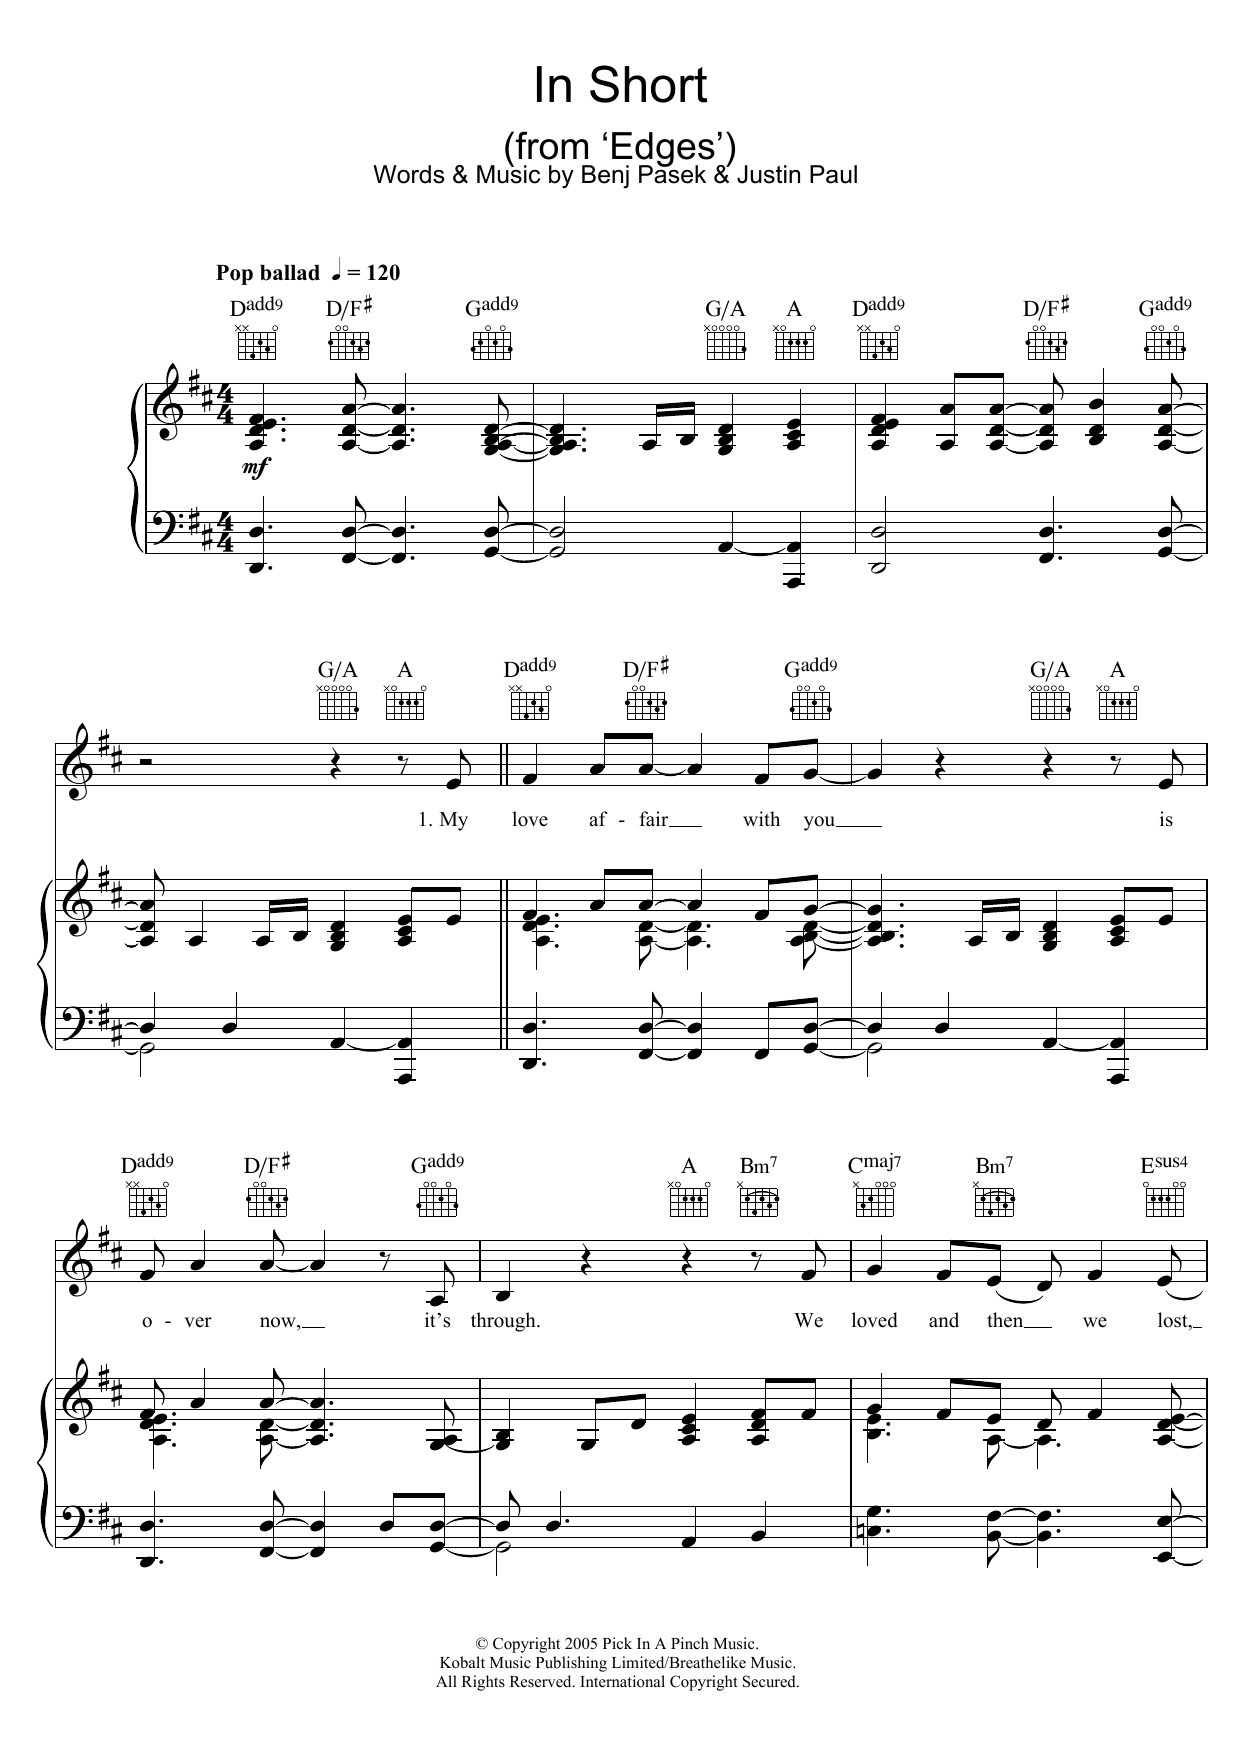 Pasek & Paul In Short (from Edges) sheet music notes printable PDF score